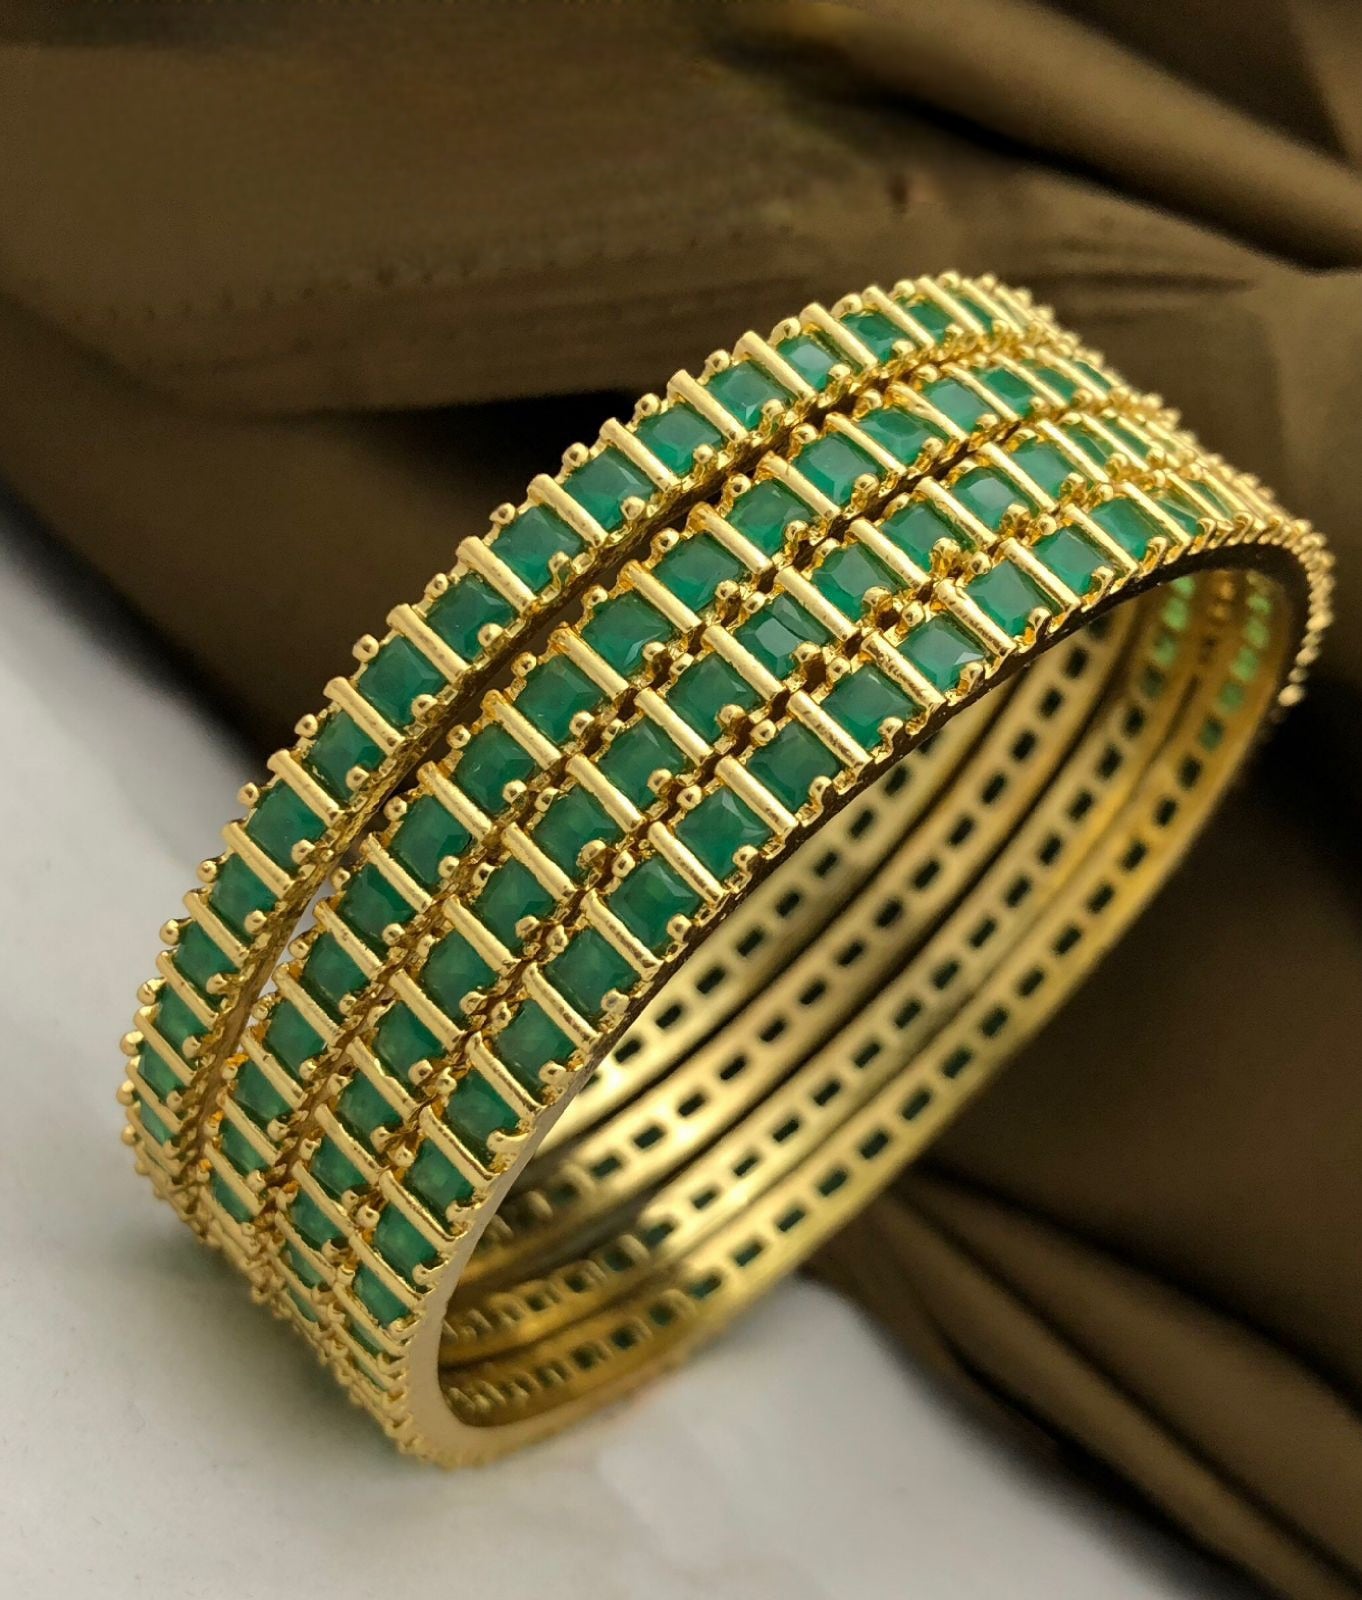 American diamond bangles set | Gold Plated Indian Bridal Bangle set of 4 | Ruby Emerald cz bangles | Daily wear one gram gold bangles